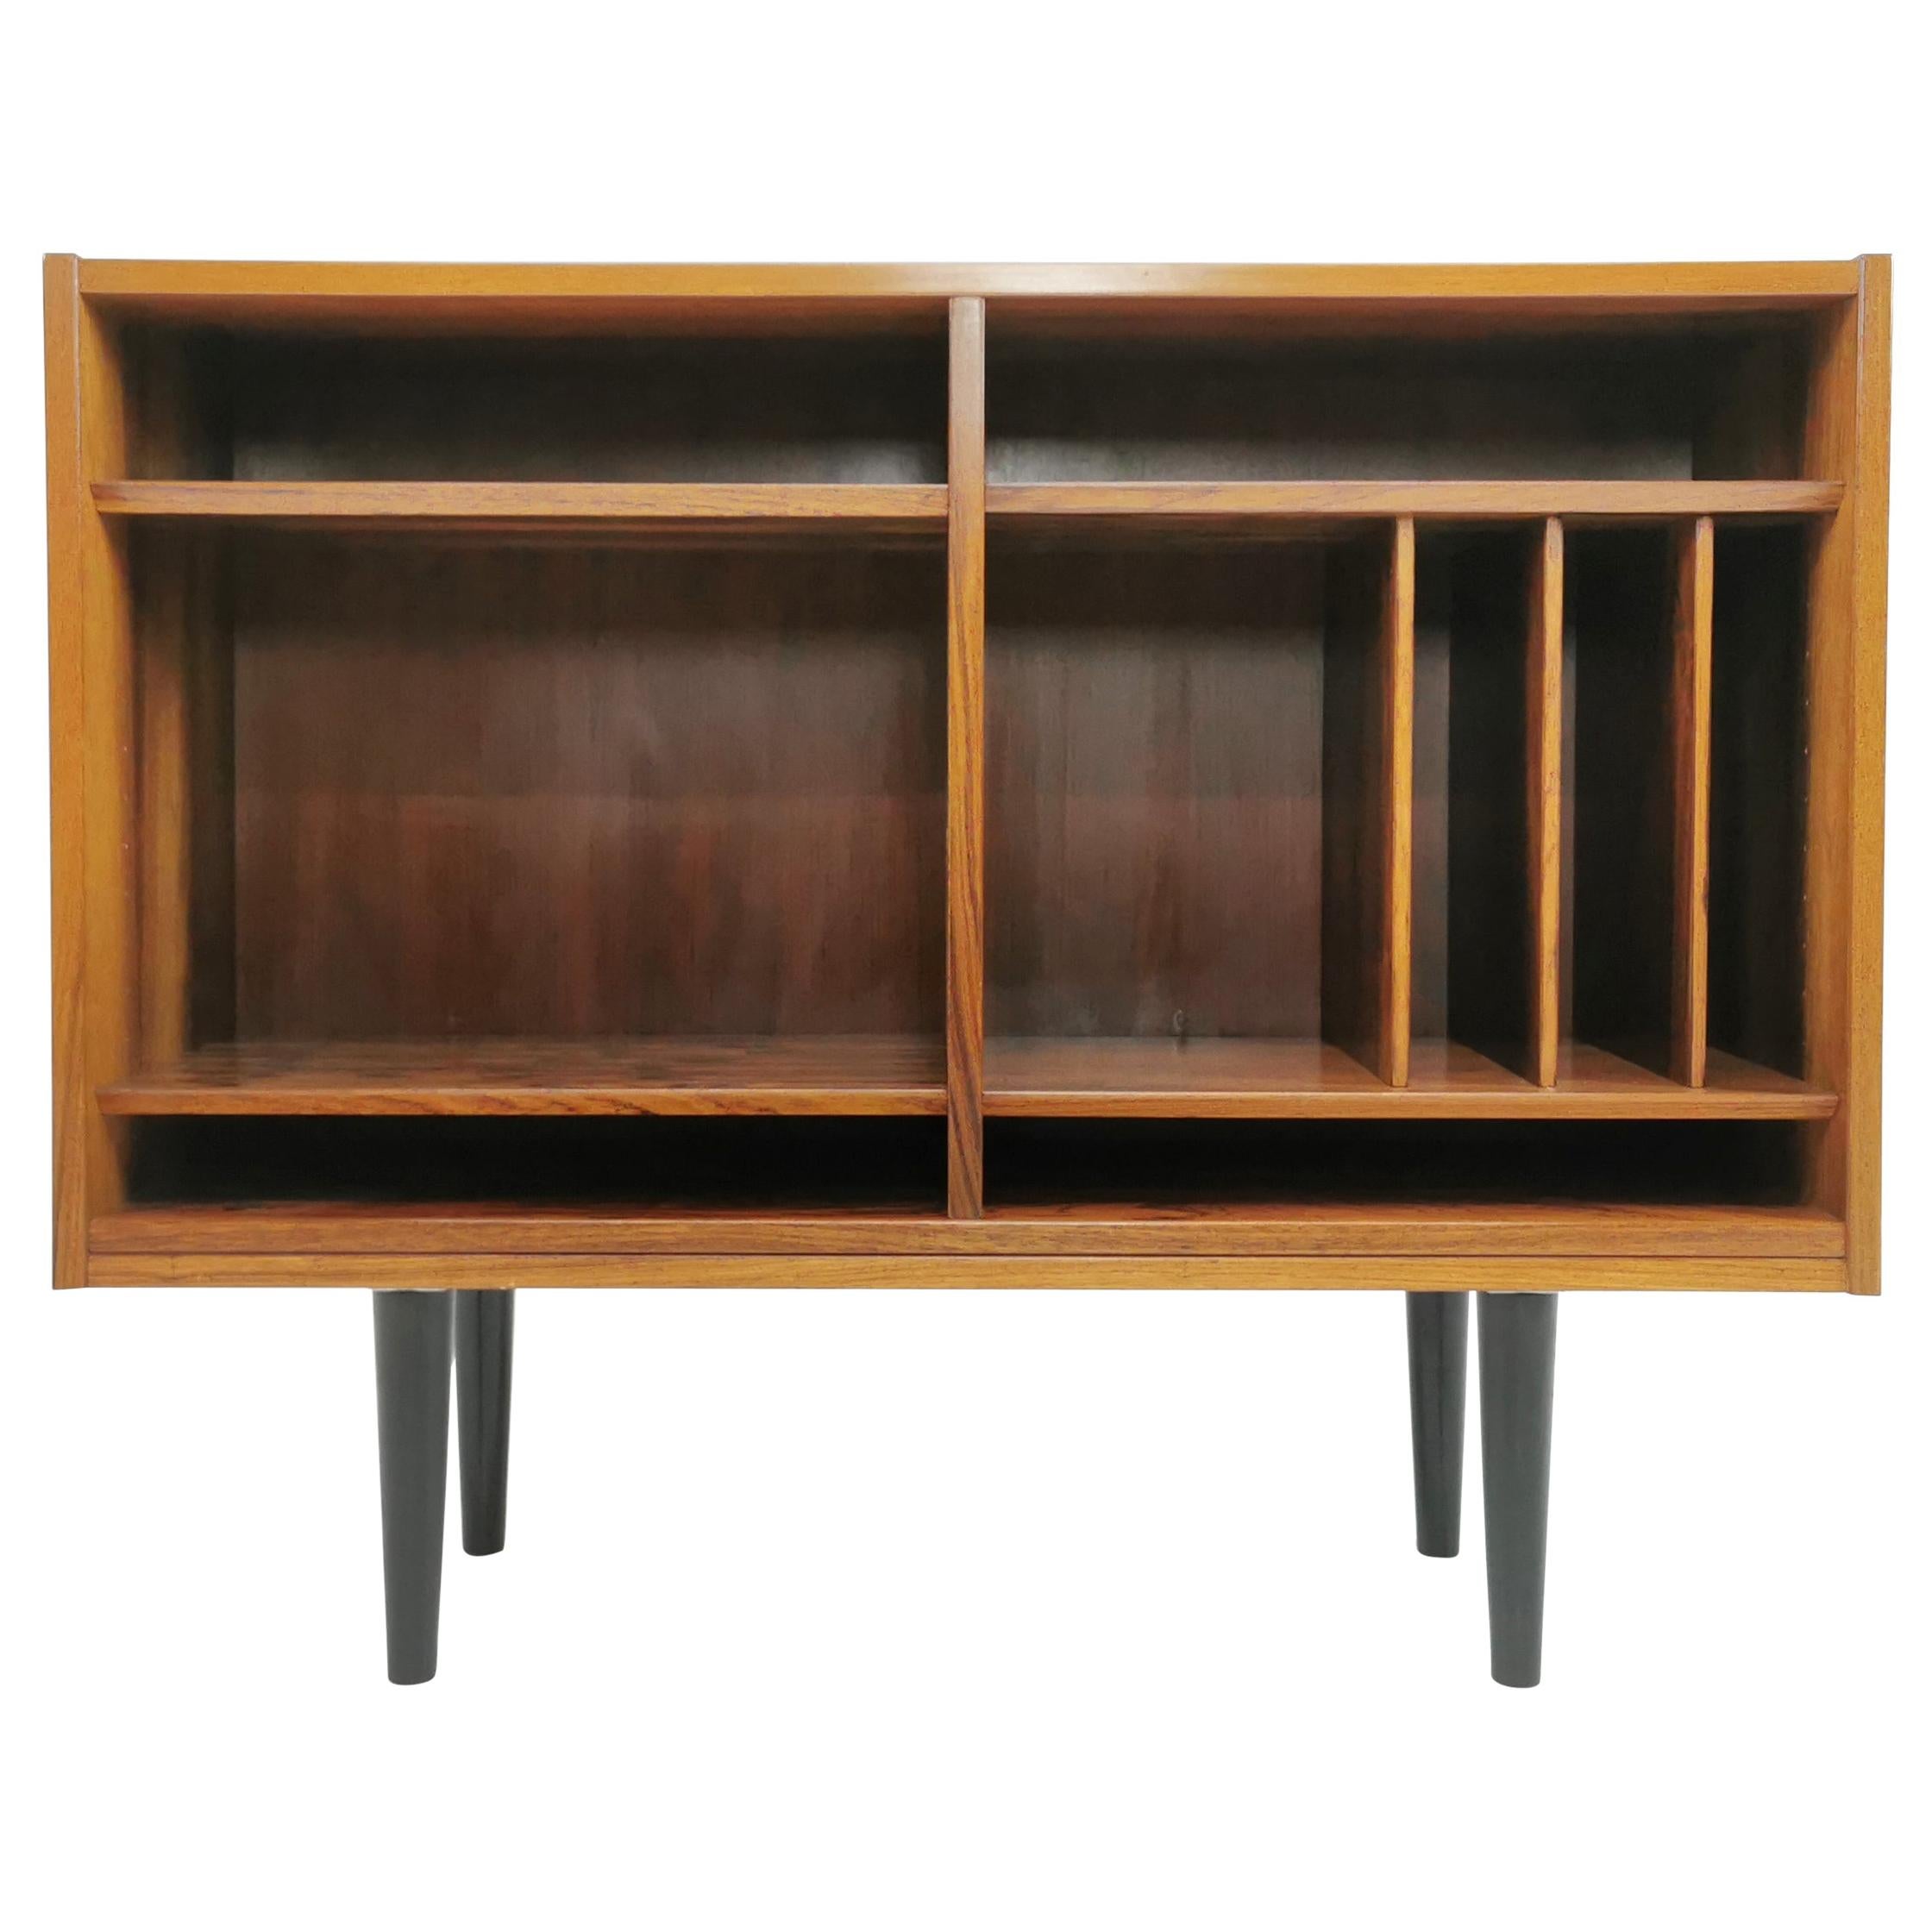 Hundevad Midcentury Bookcase Rosewood, Danish, 1960s-1970s